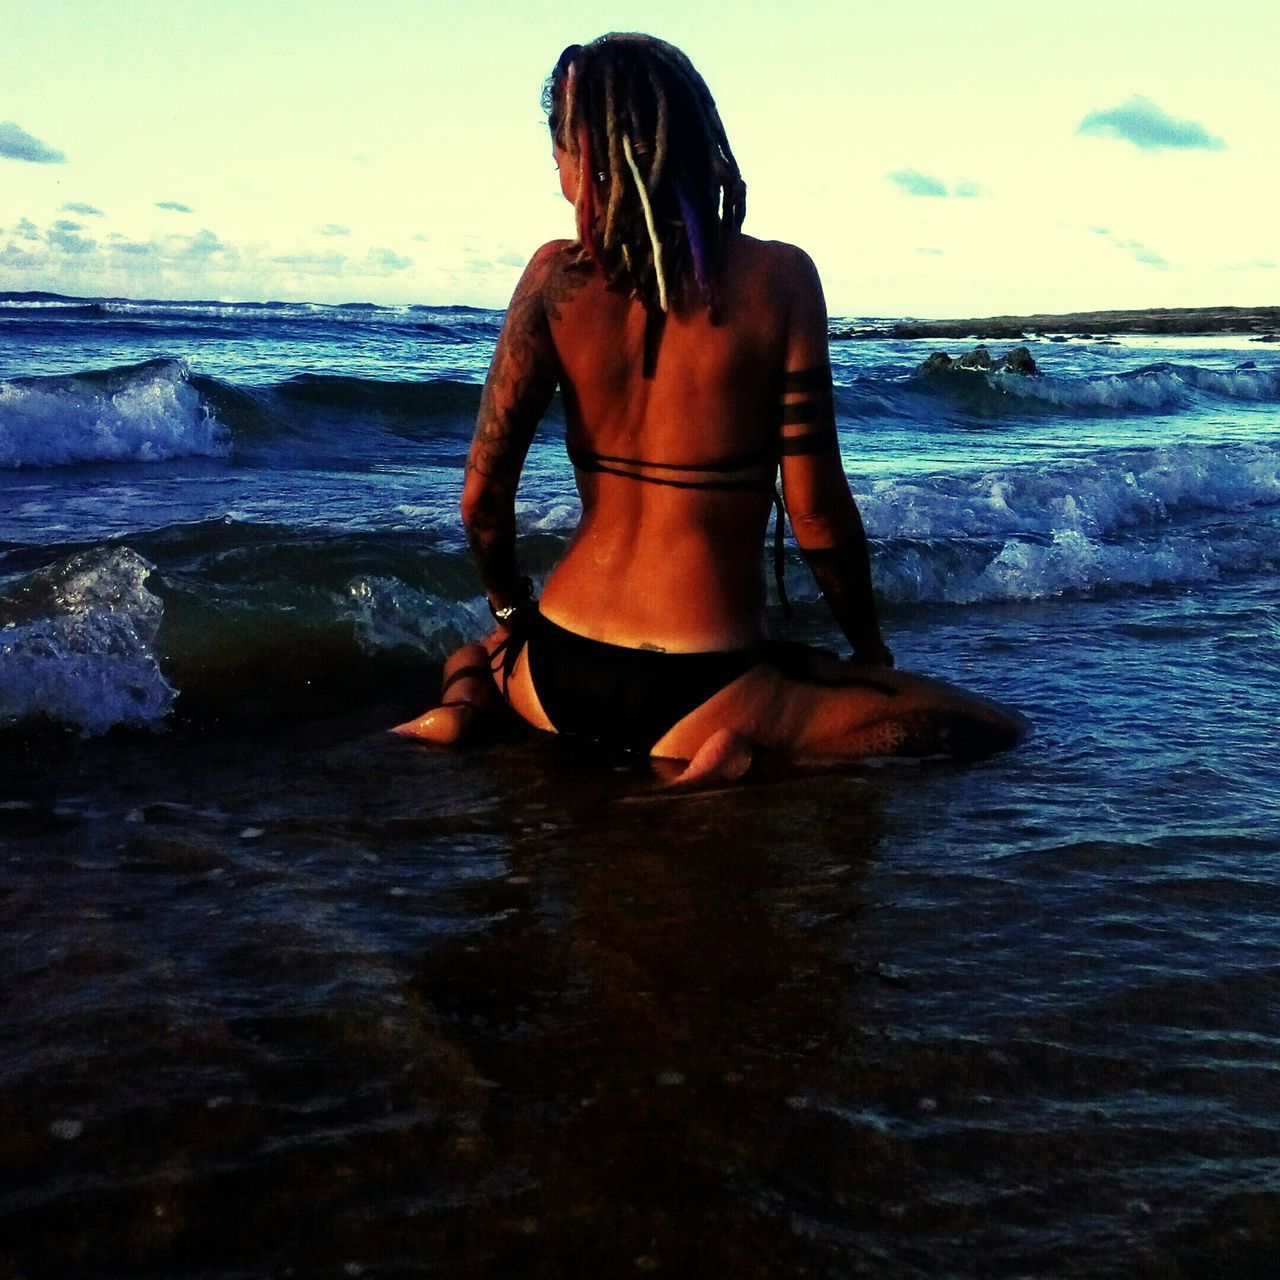 YOUNG WOMAN AT BEACH